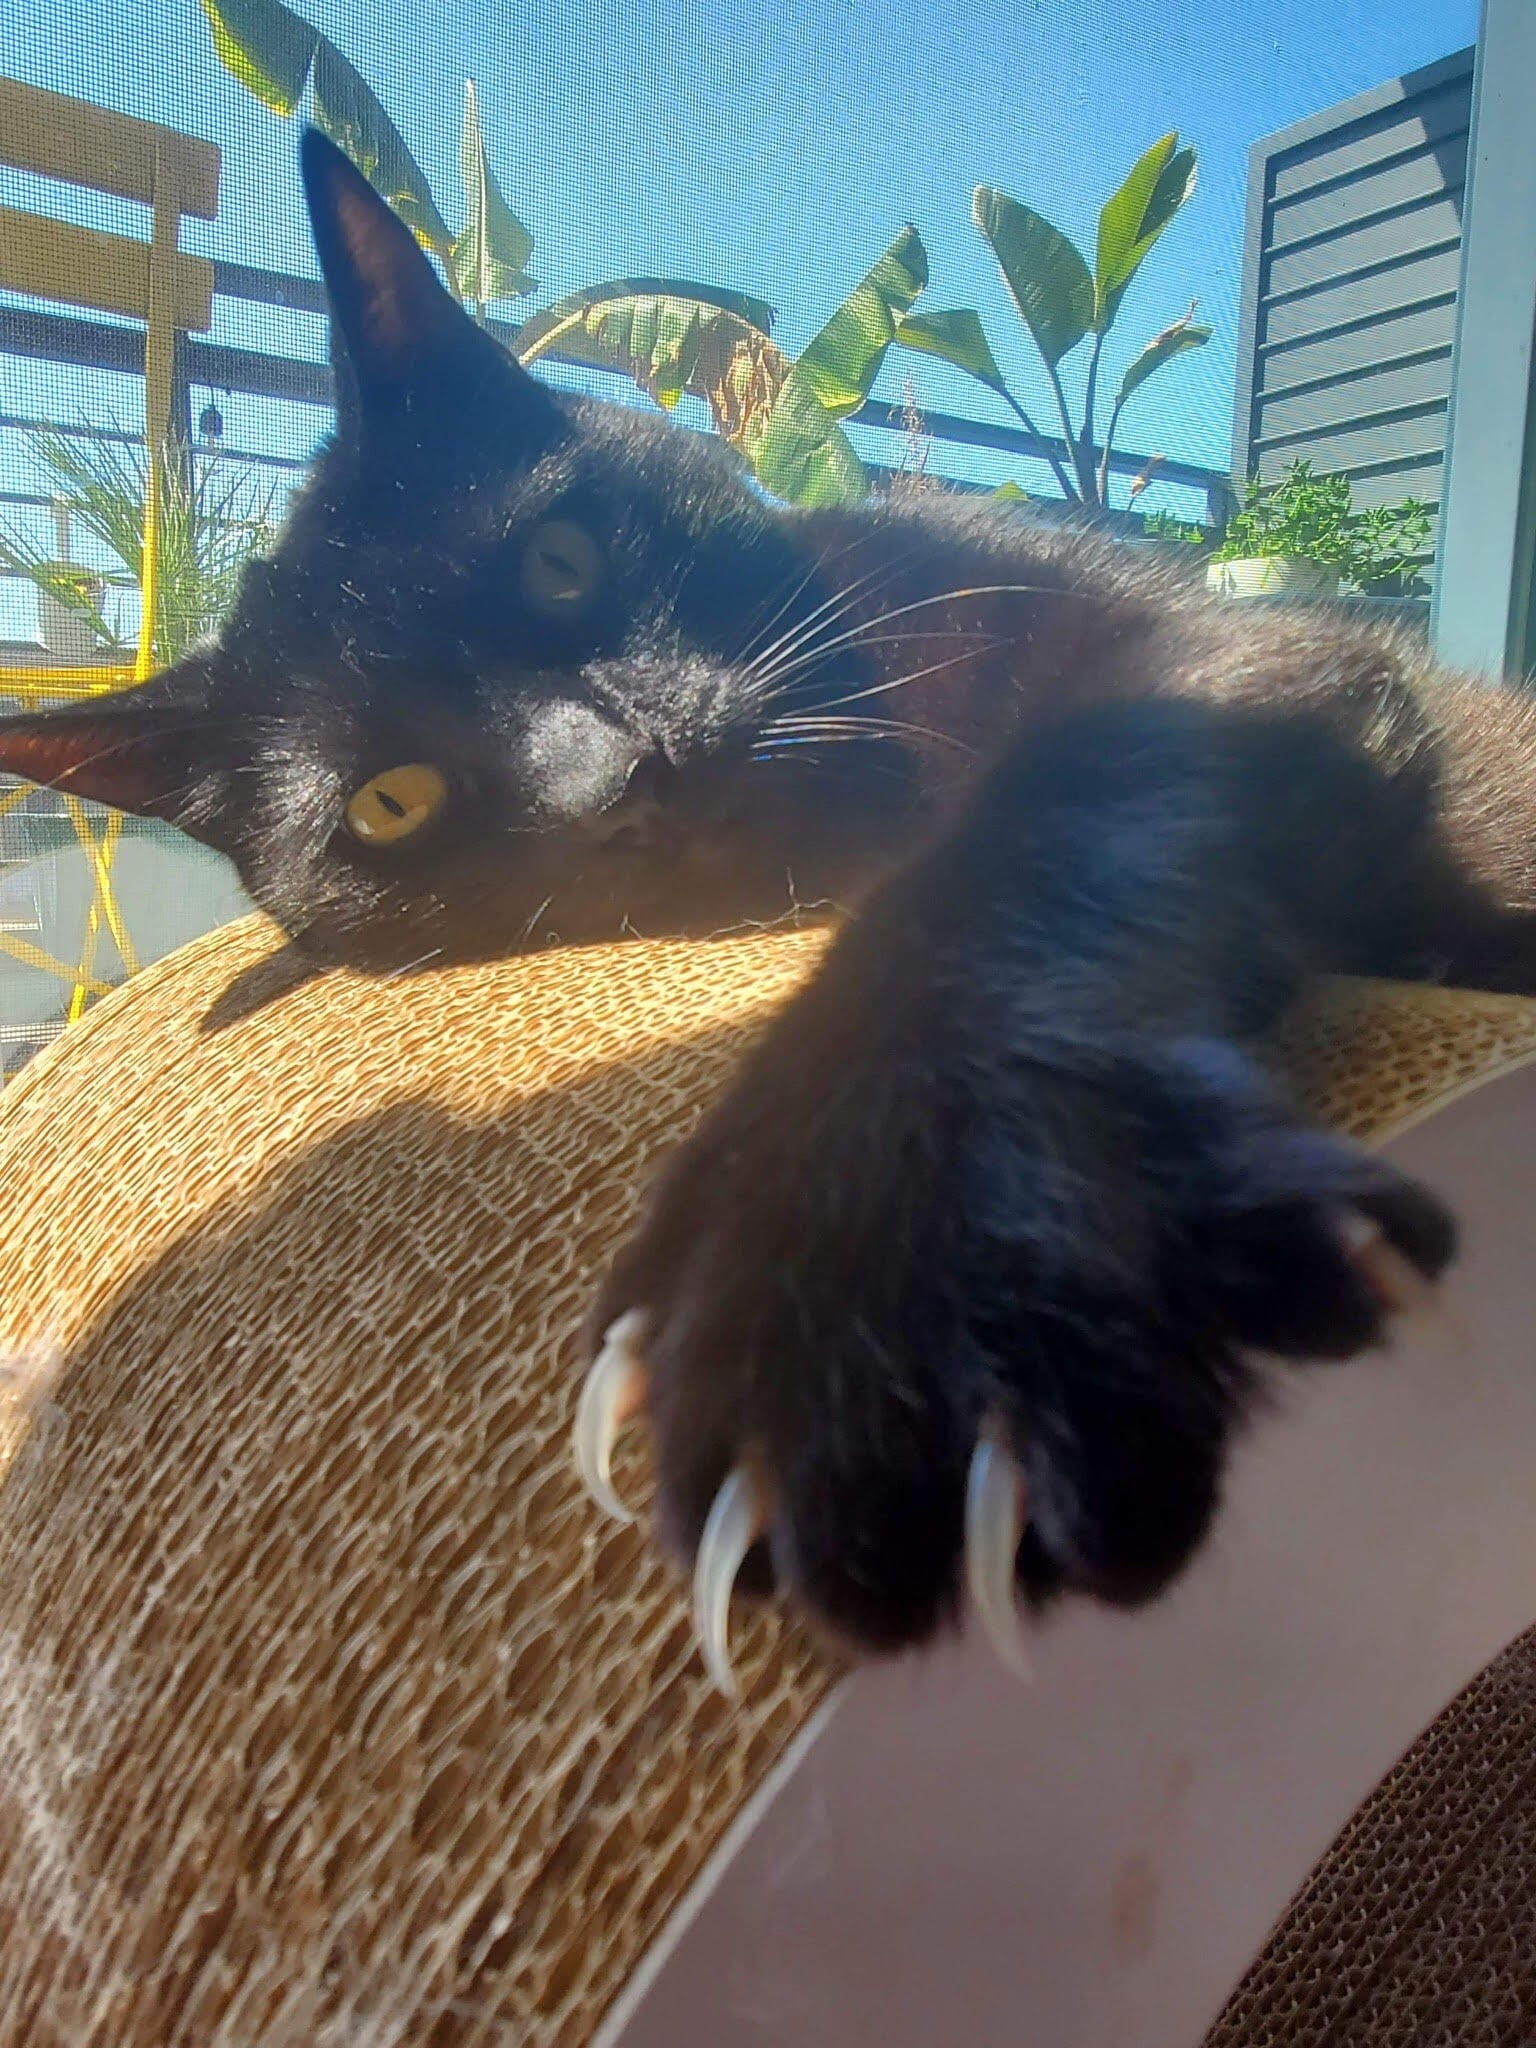 November Cool Cat of the Month: Meet Fang!